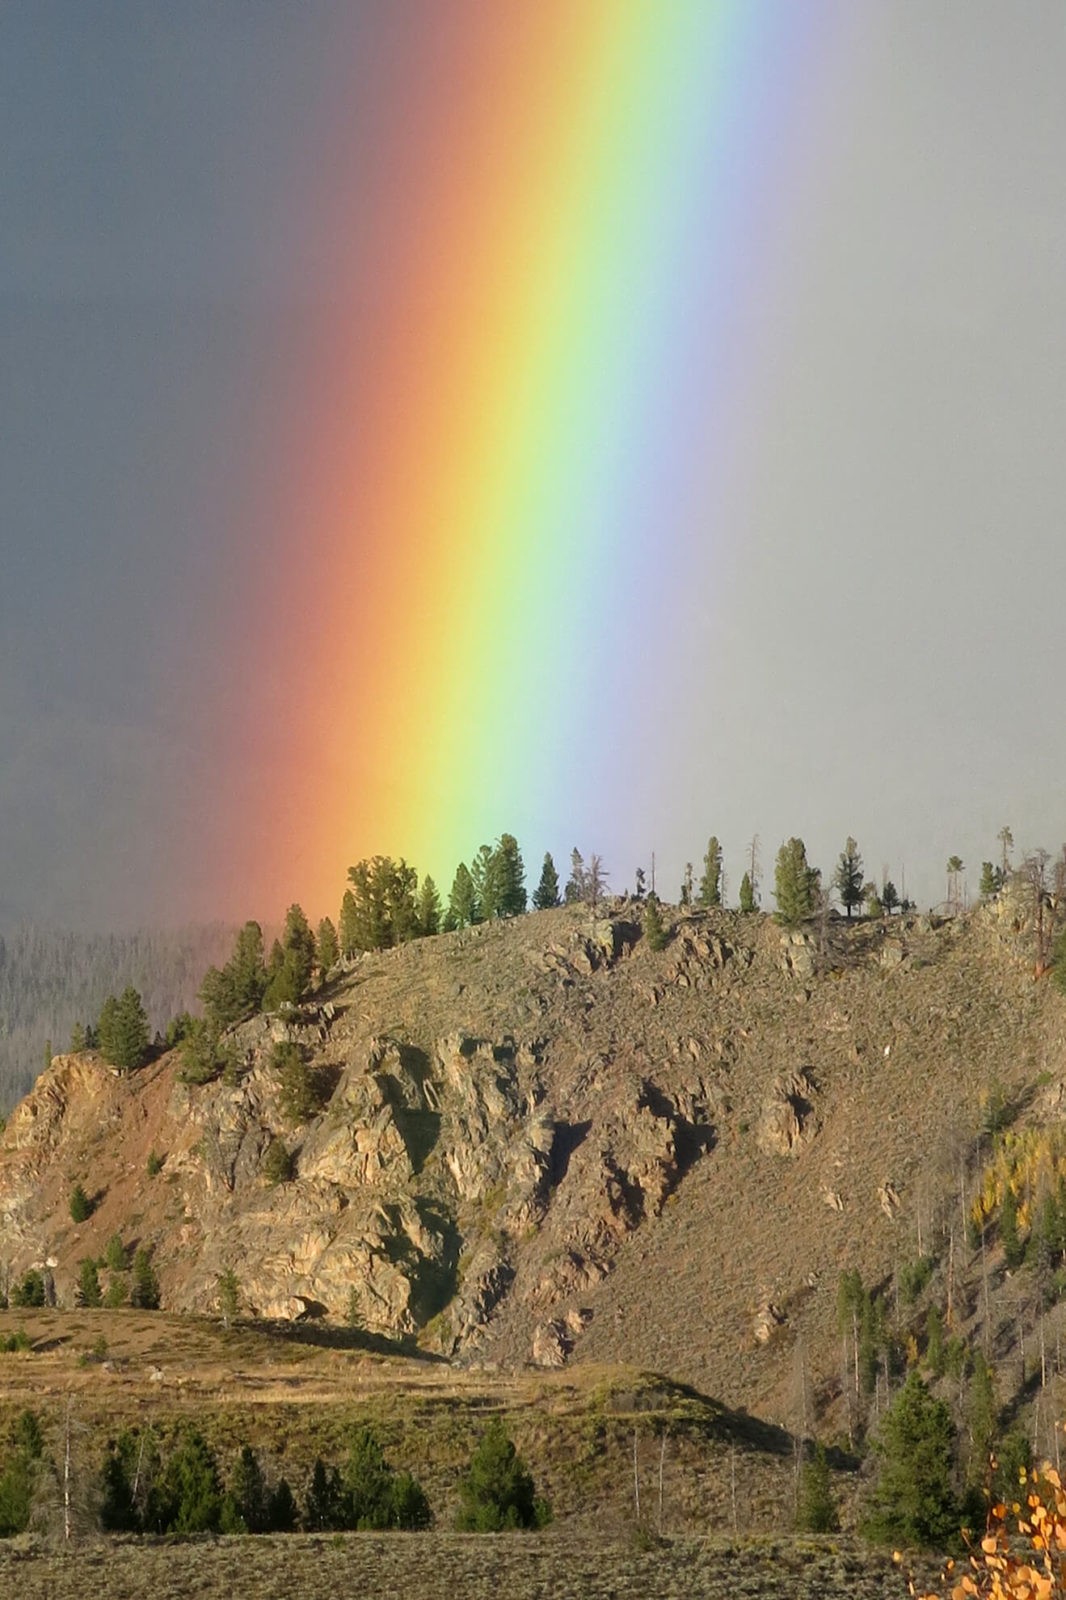 Robin Botie of ithaca, New York, photographs a rainbow at Arapaho Recreation Area